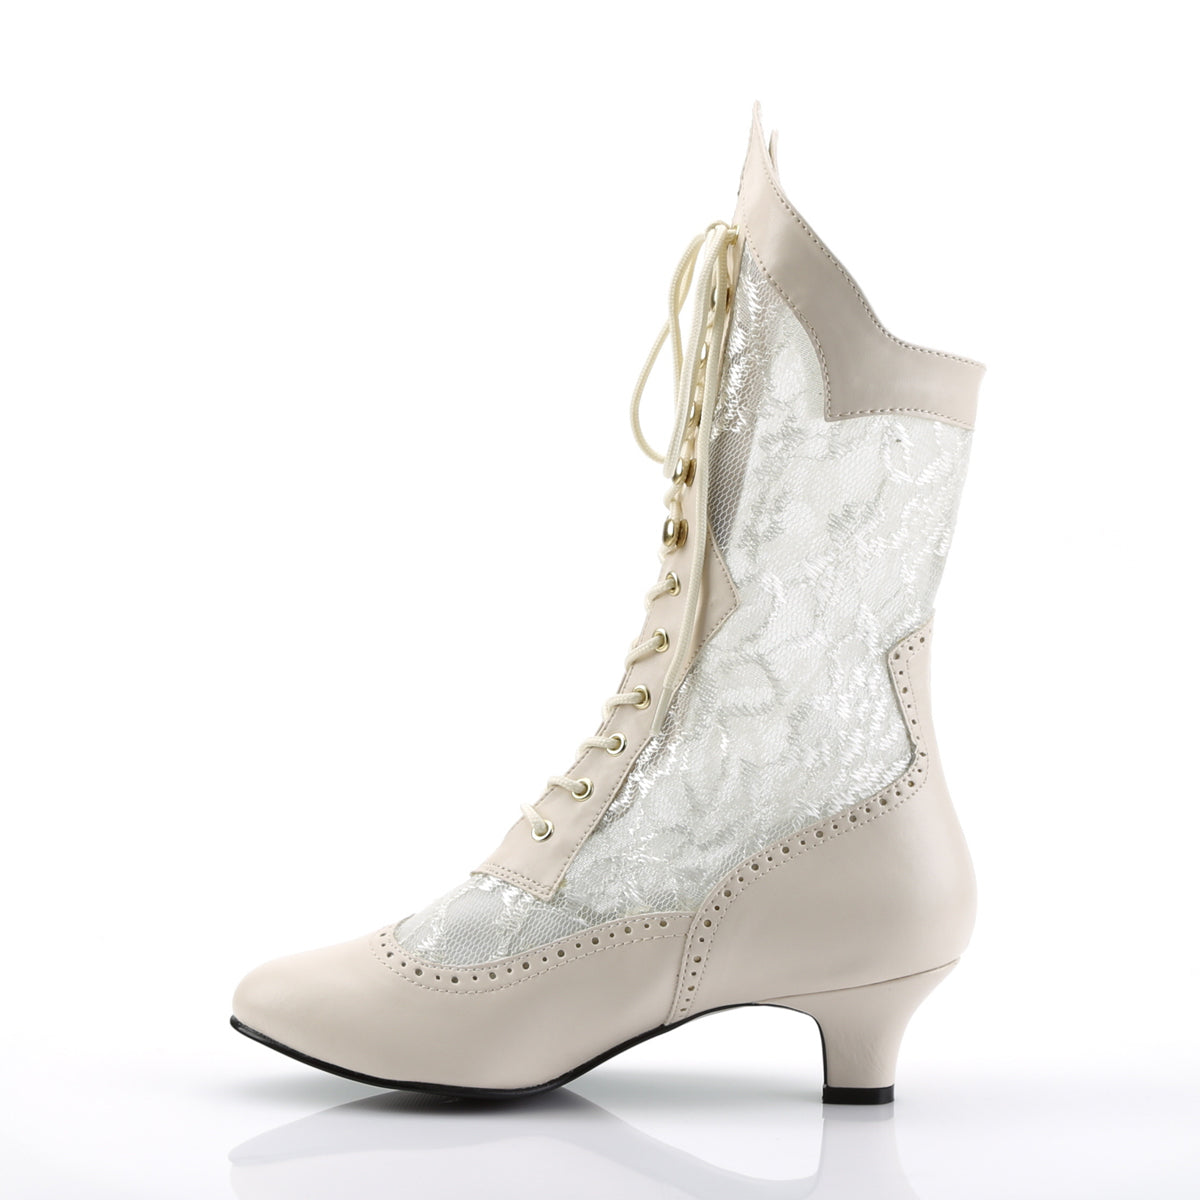 DAME-115 2 Inch Heel Ivory Pu Women's Boots Funtasma Costume Shoes 